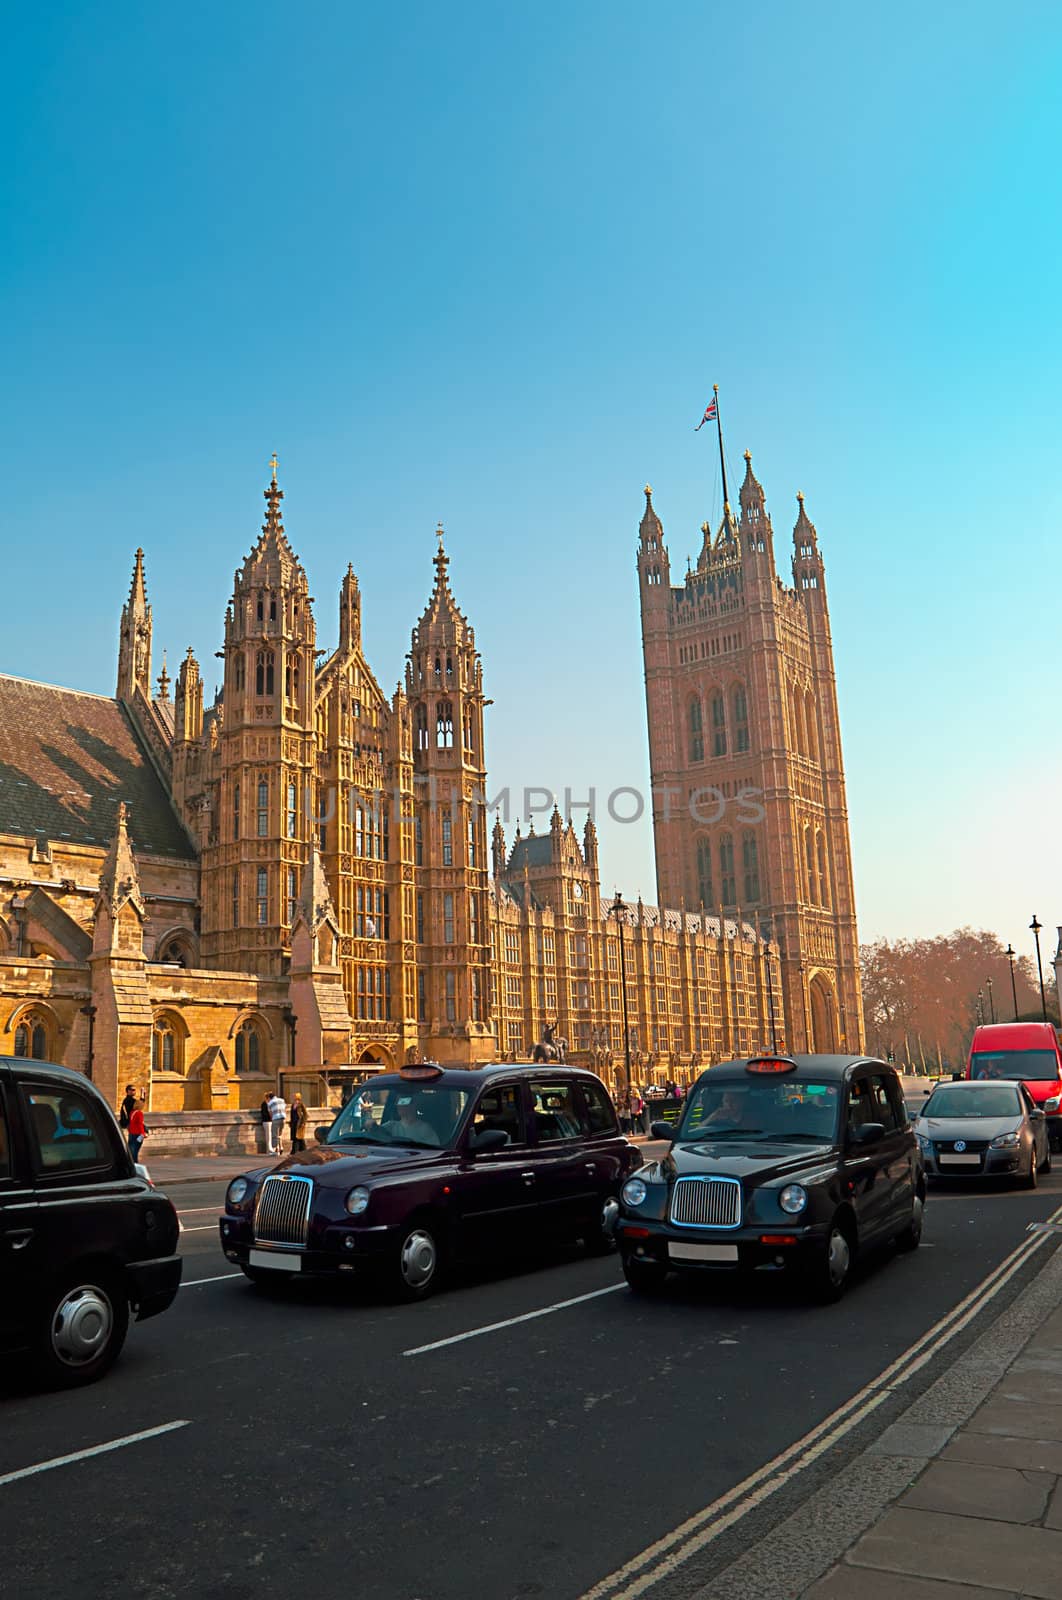 London, England. Parliament. by LarisaP